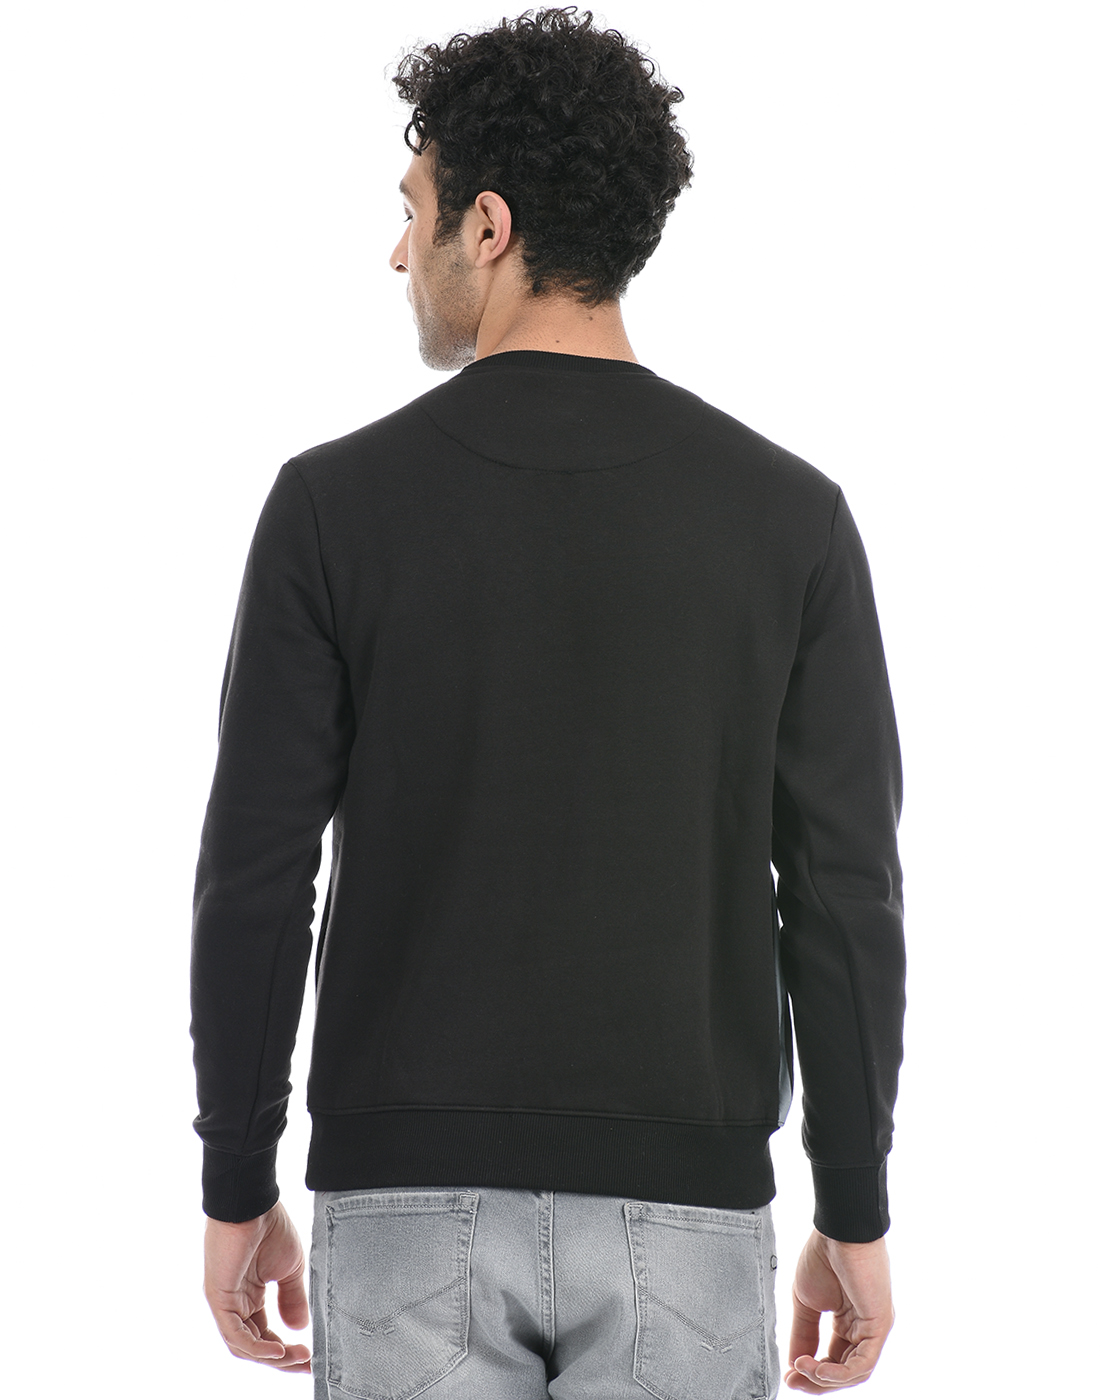 Cloak & Decker by Monte Carlo Men Printed Black Sweatshirt